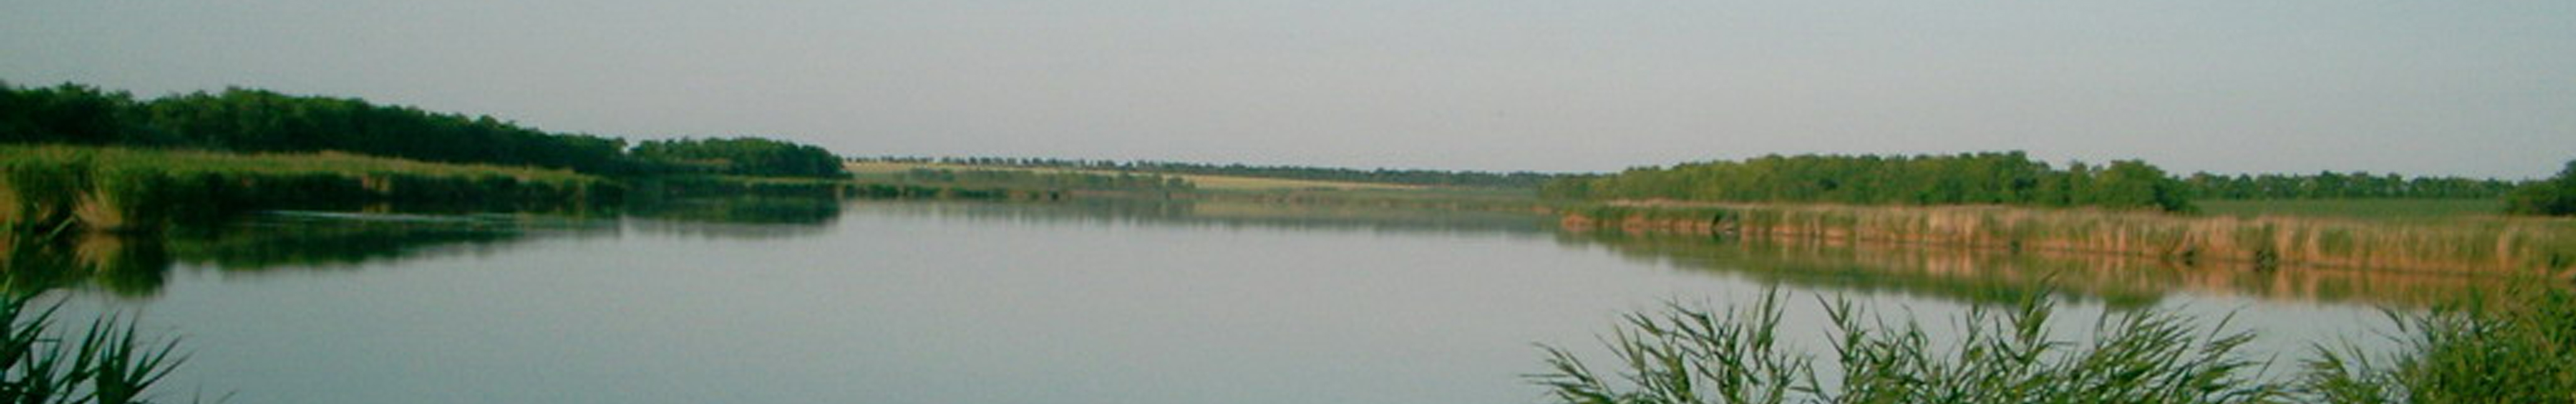 Panorama4.jpg